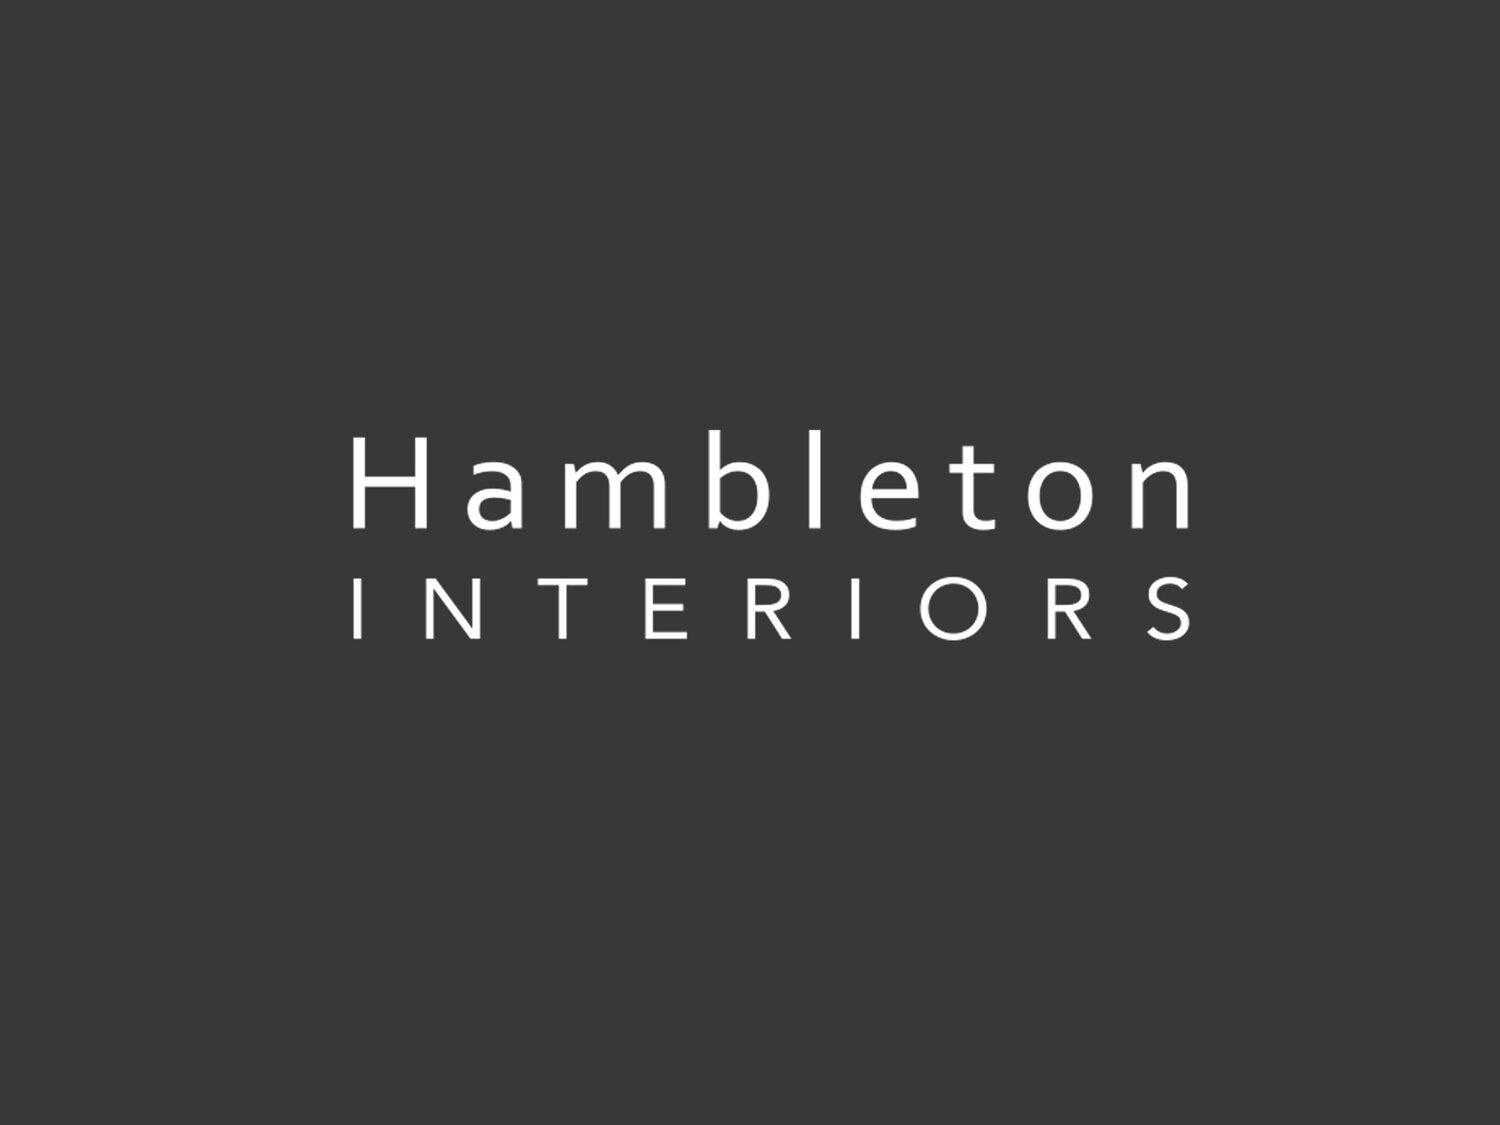 Hambleton Interiors